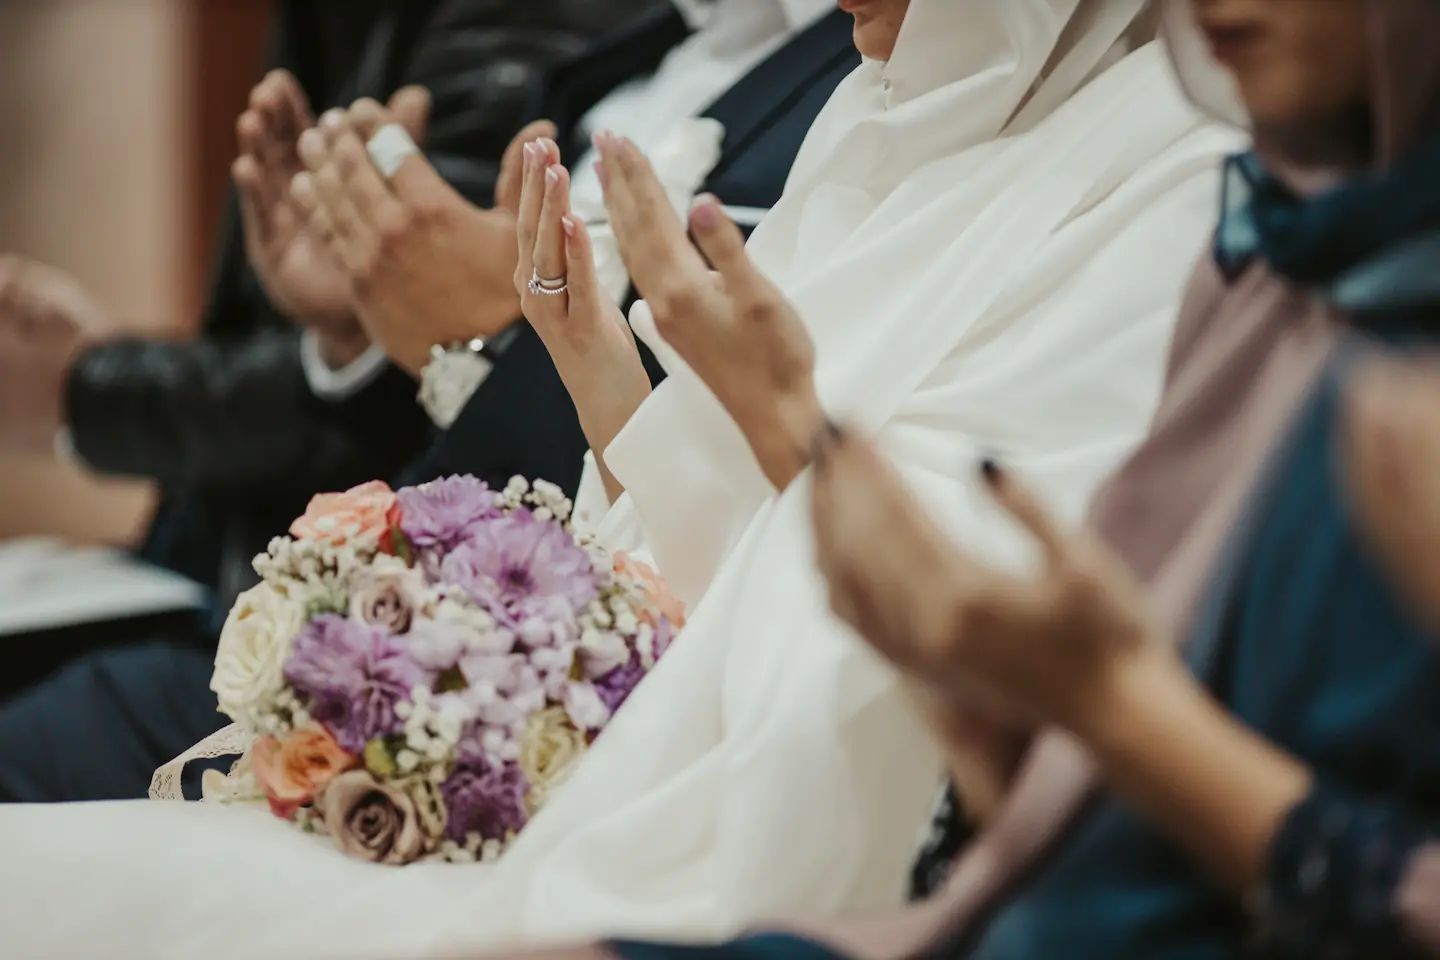 Muslim woman and muslim groom both raising hands to make dua after being married